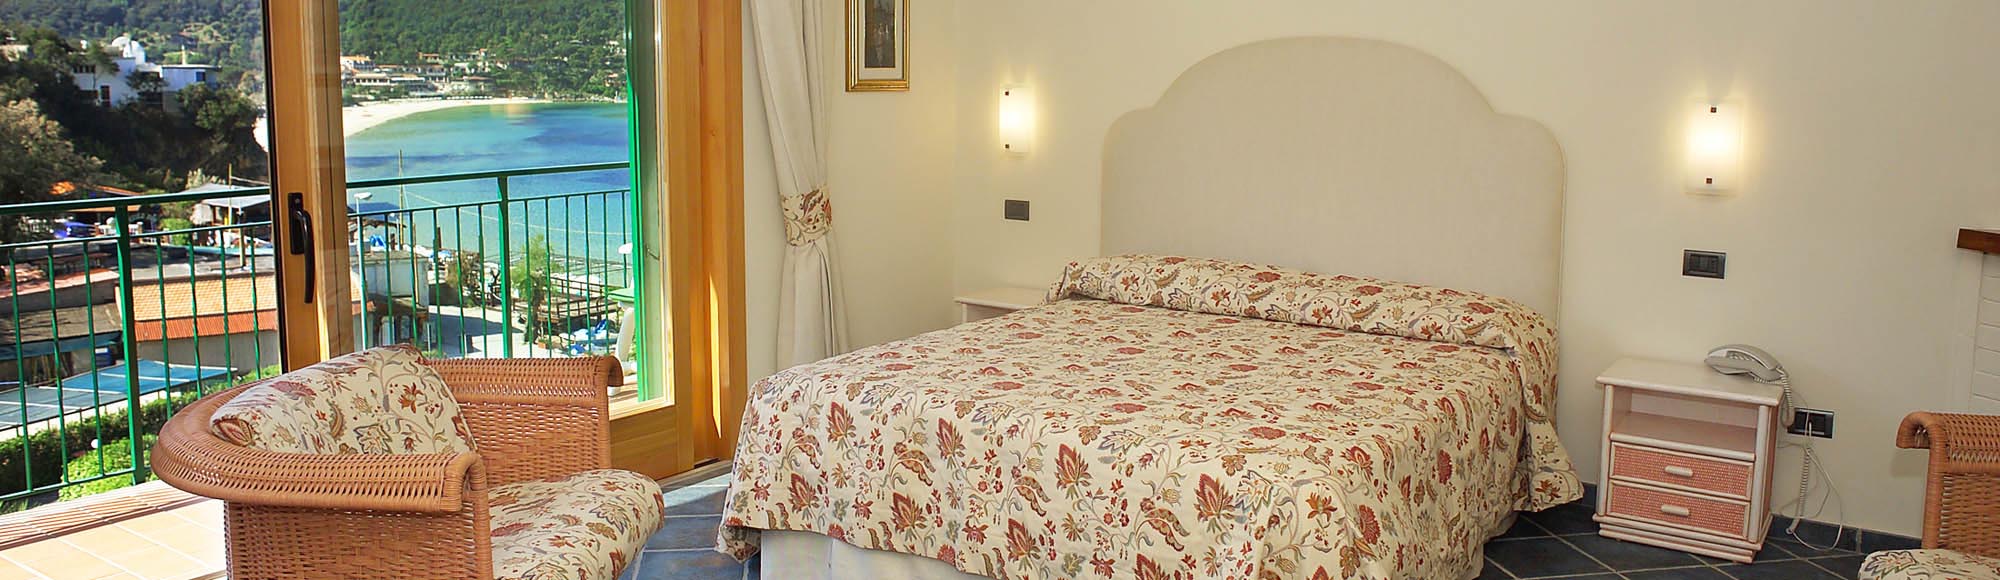 Hotel Toscana mare